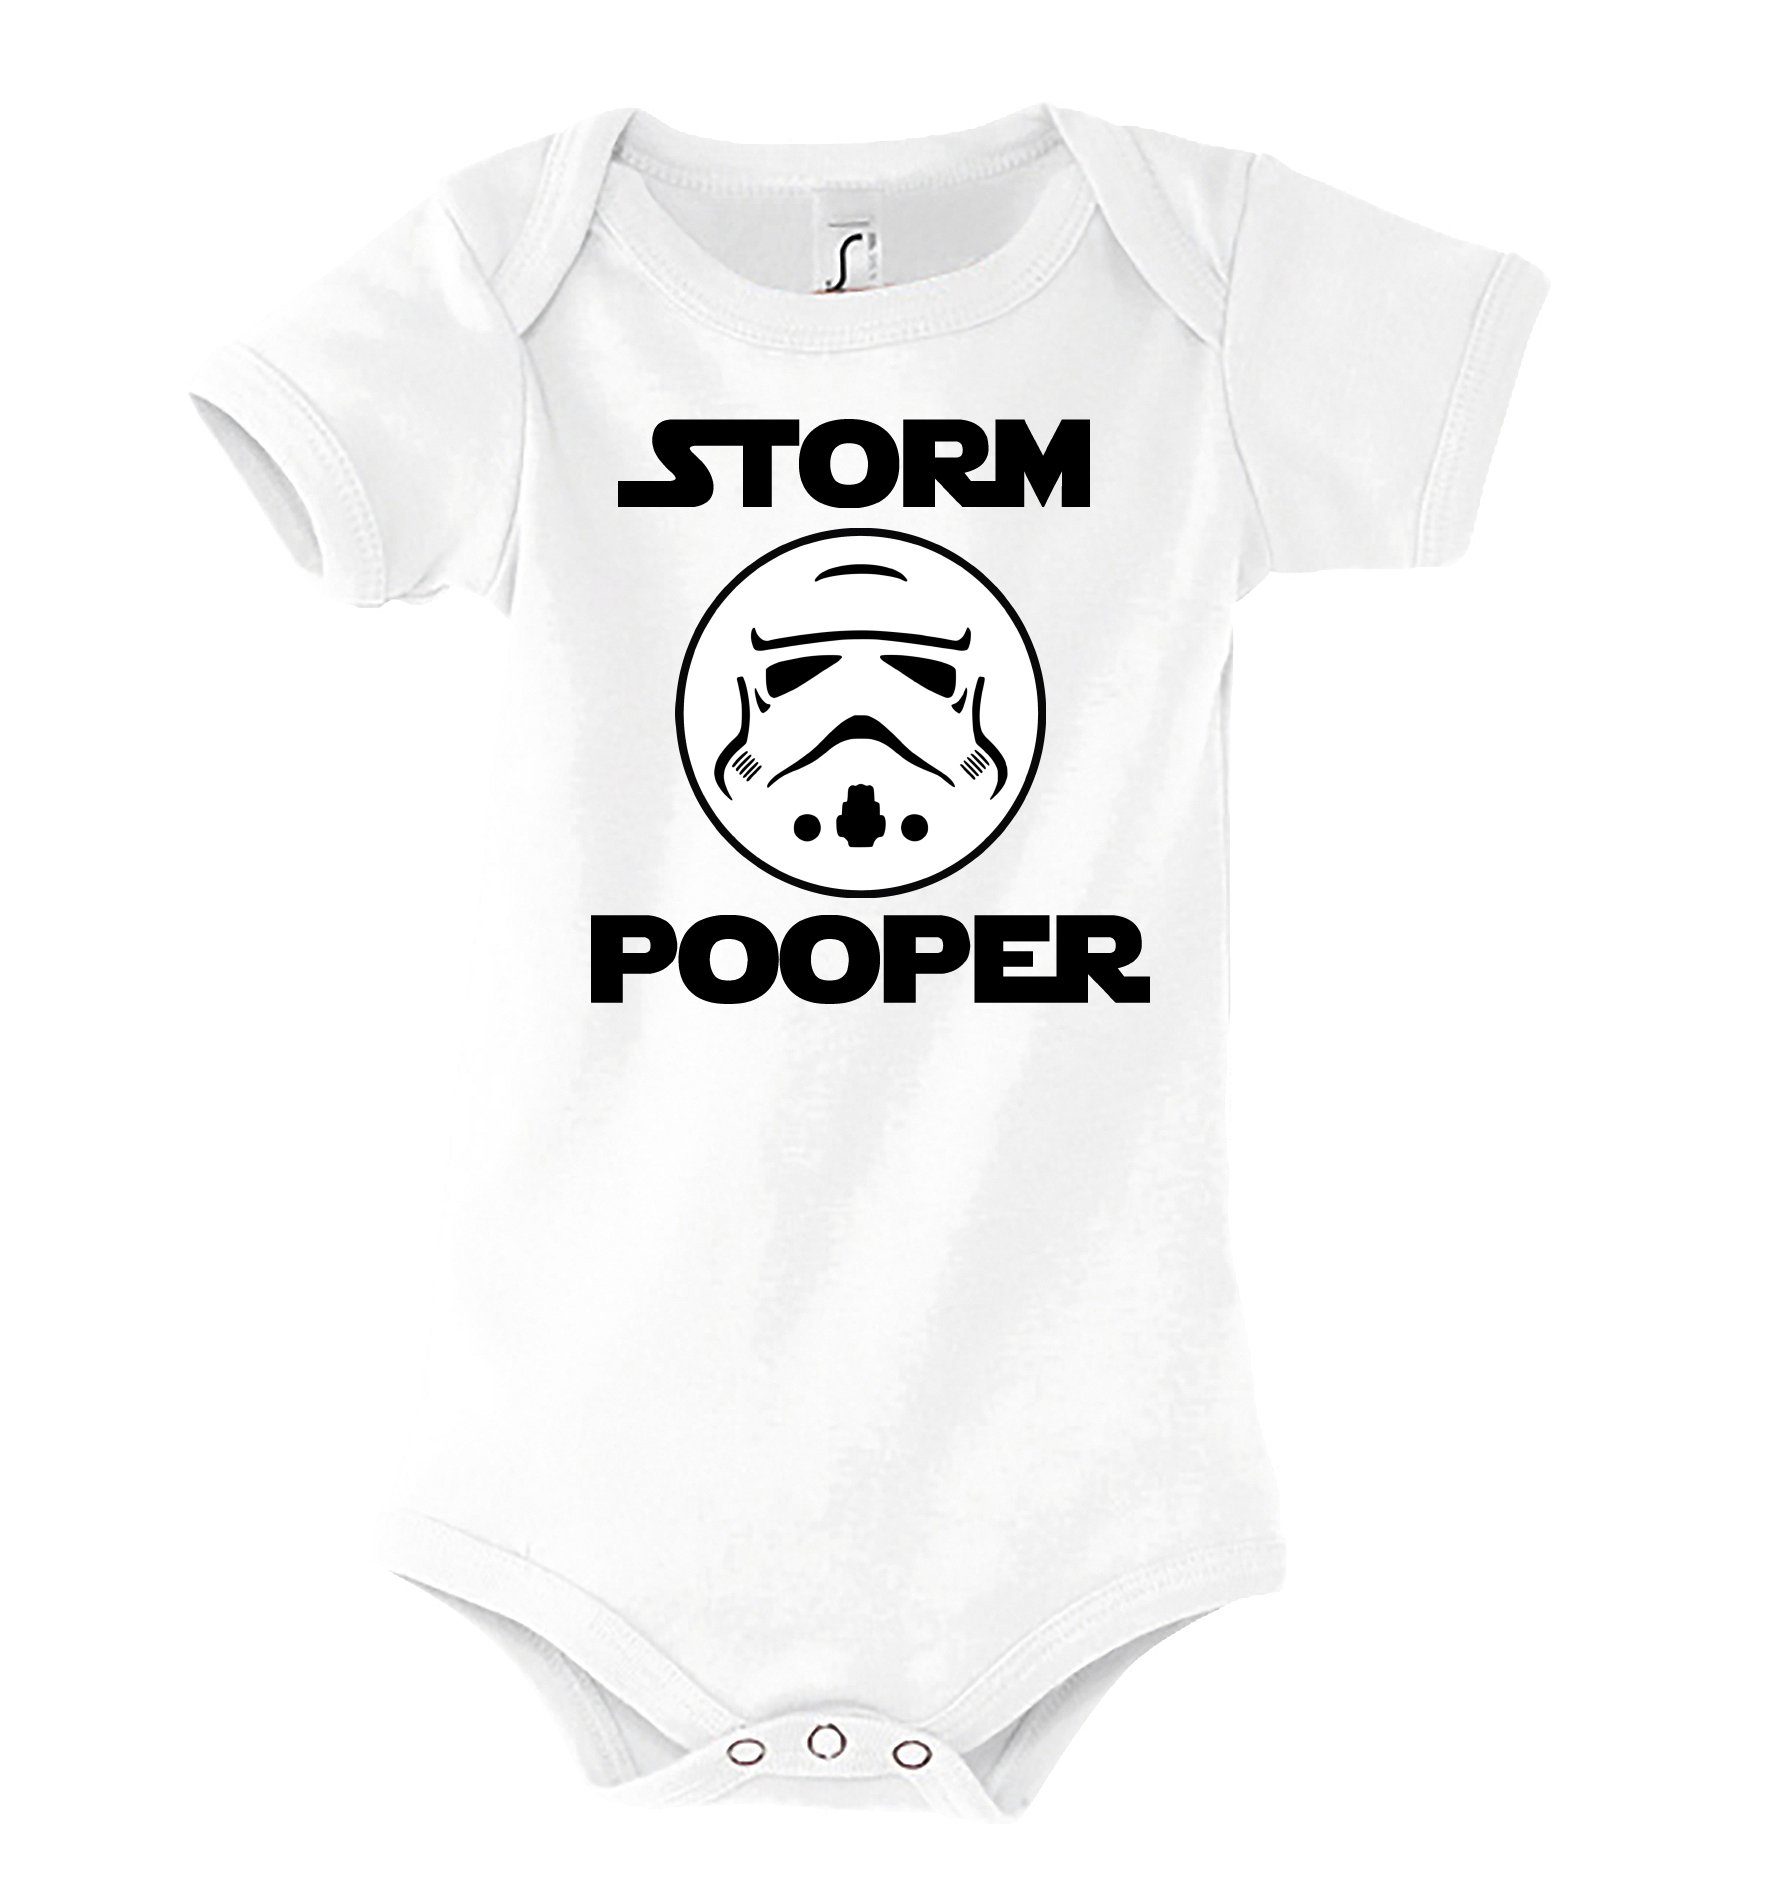 Youth Designz Kurzarmbody Storm Pooper Trooper Baby Body Kurzarm Strampler mit lustigem Spruch & Logo Print Weiß